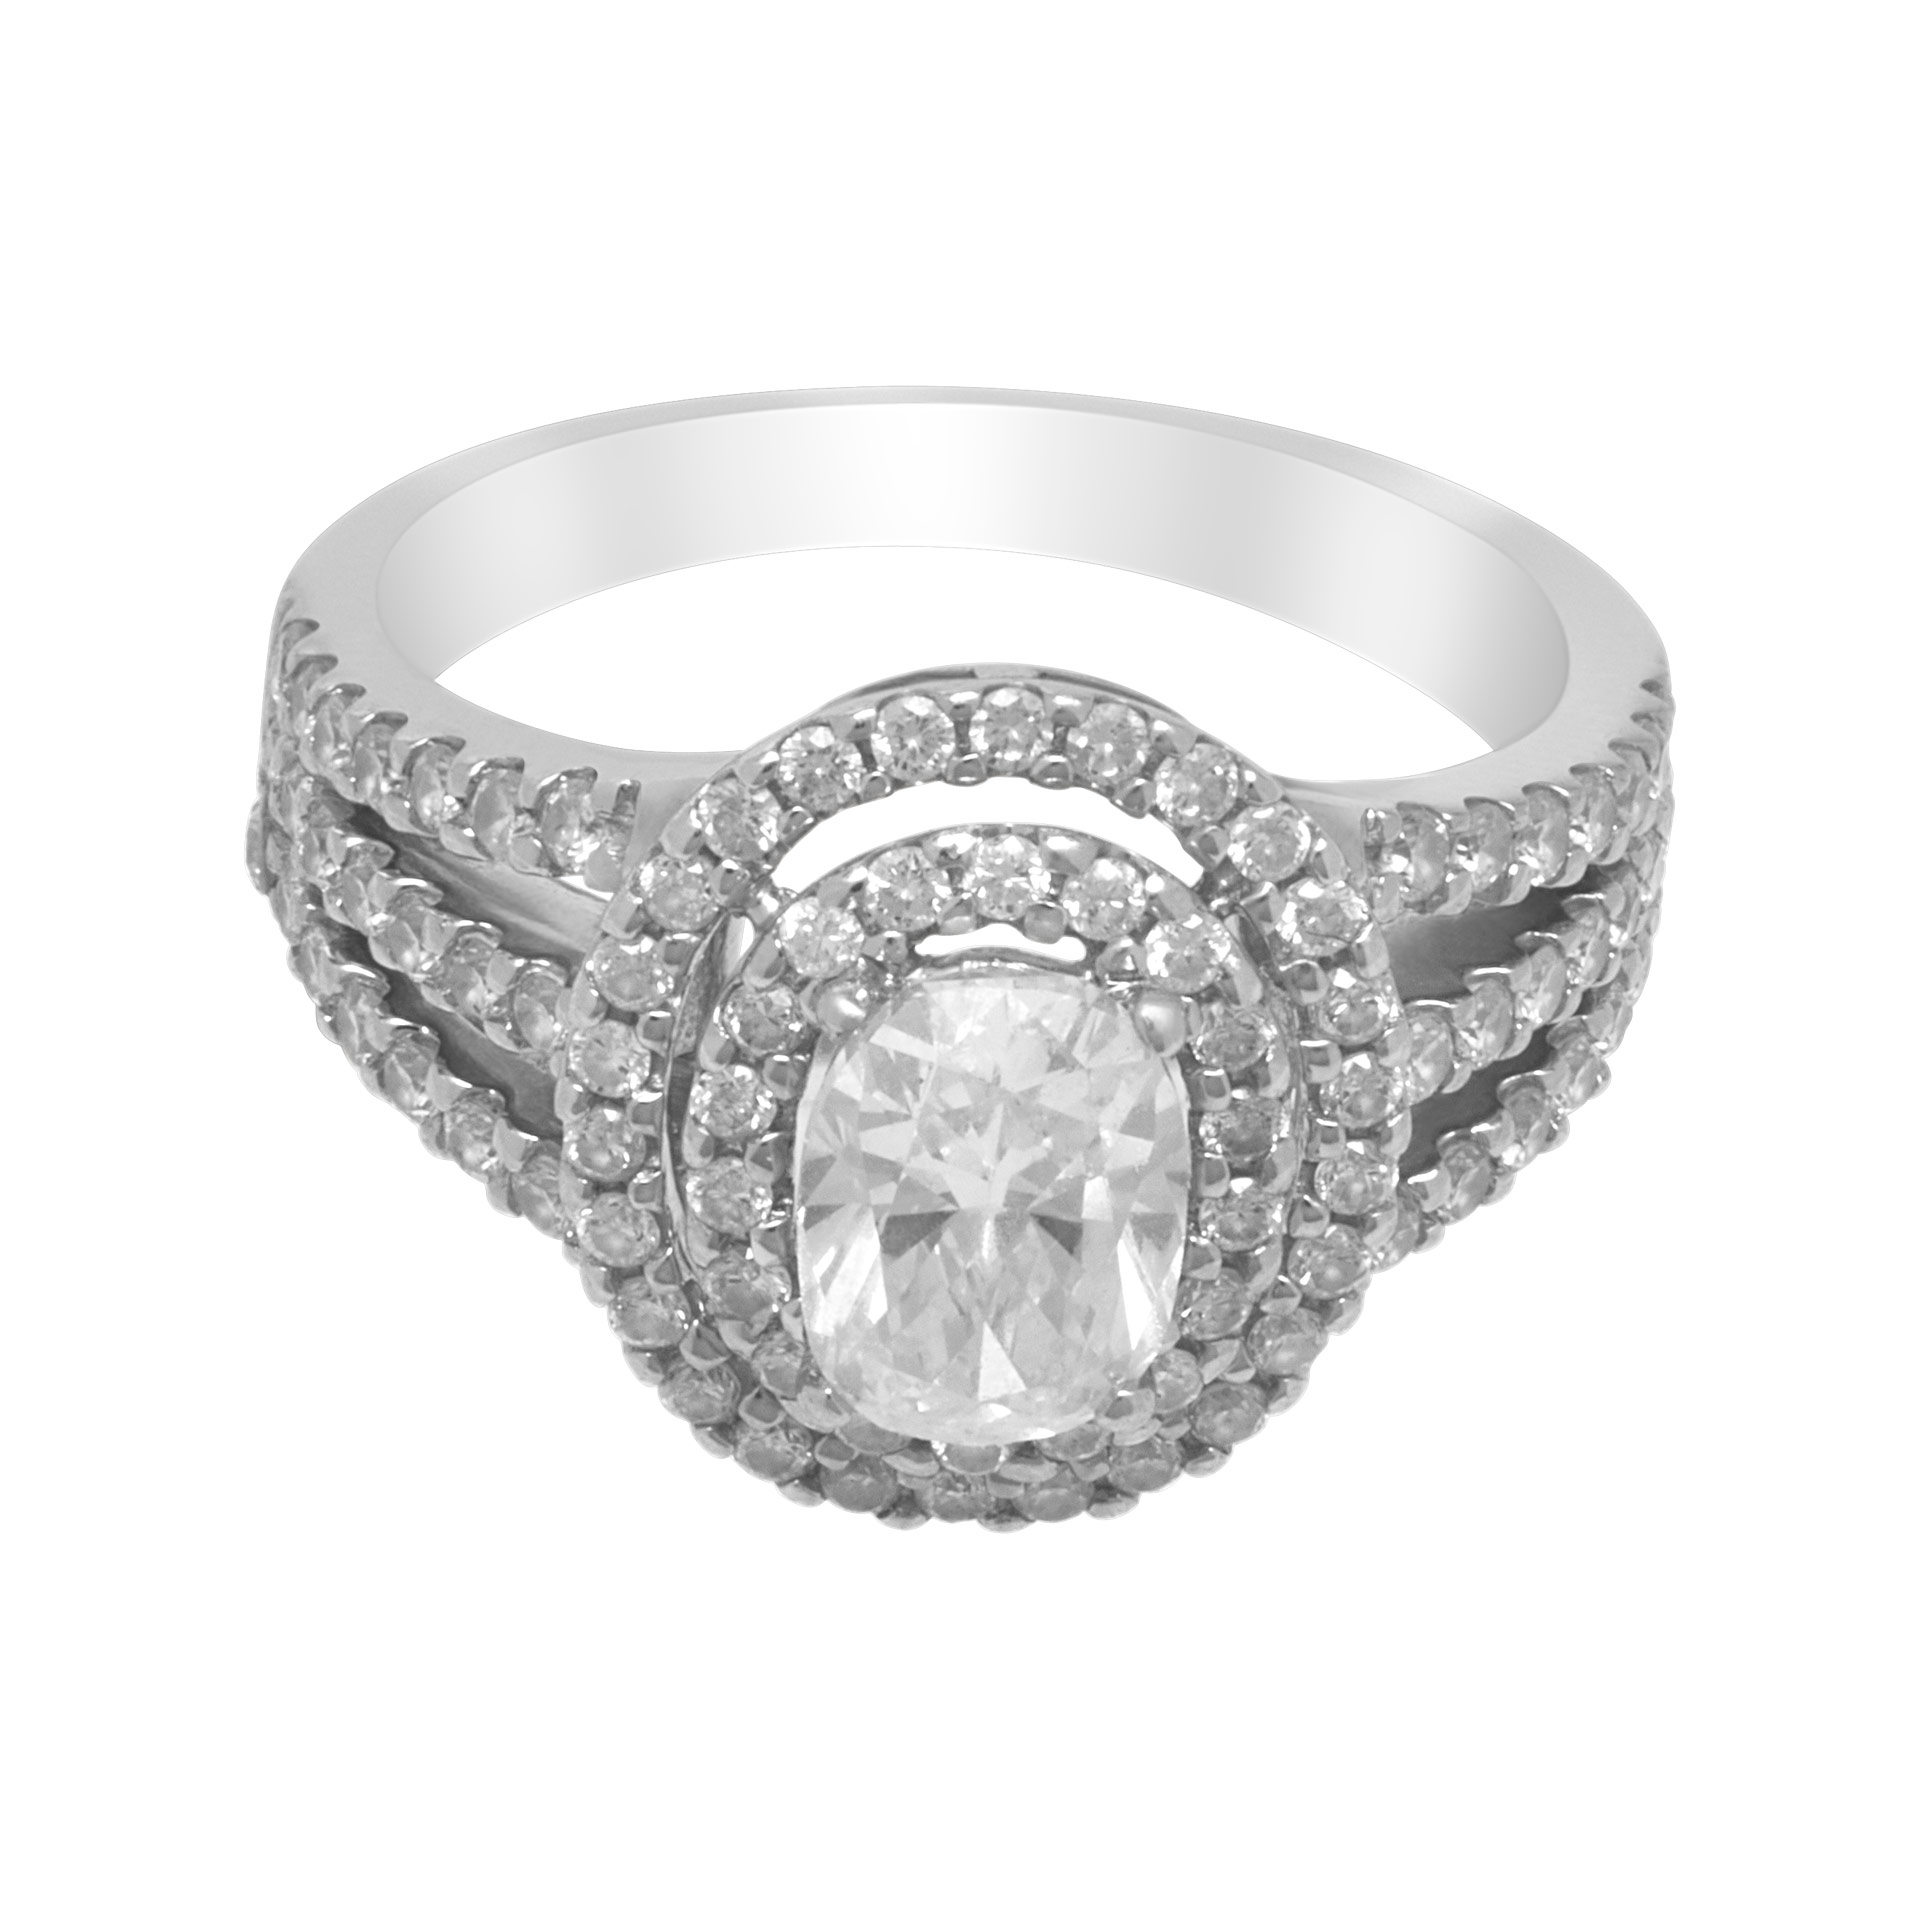 GIA certified cushion cut diamond 1.01 carat G color, VS2  clarity diamond ring